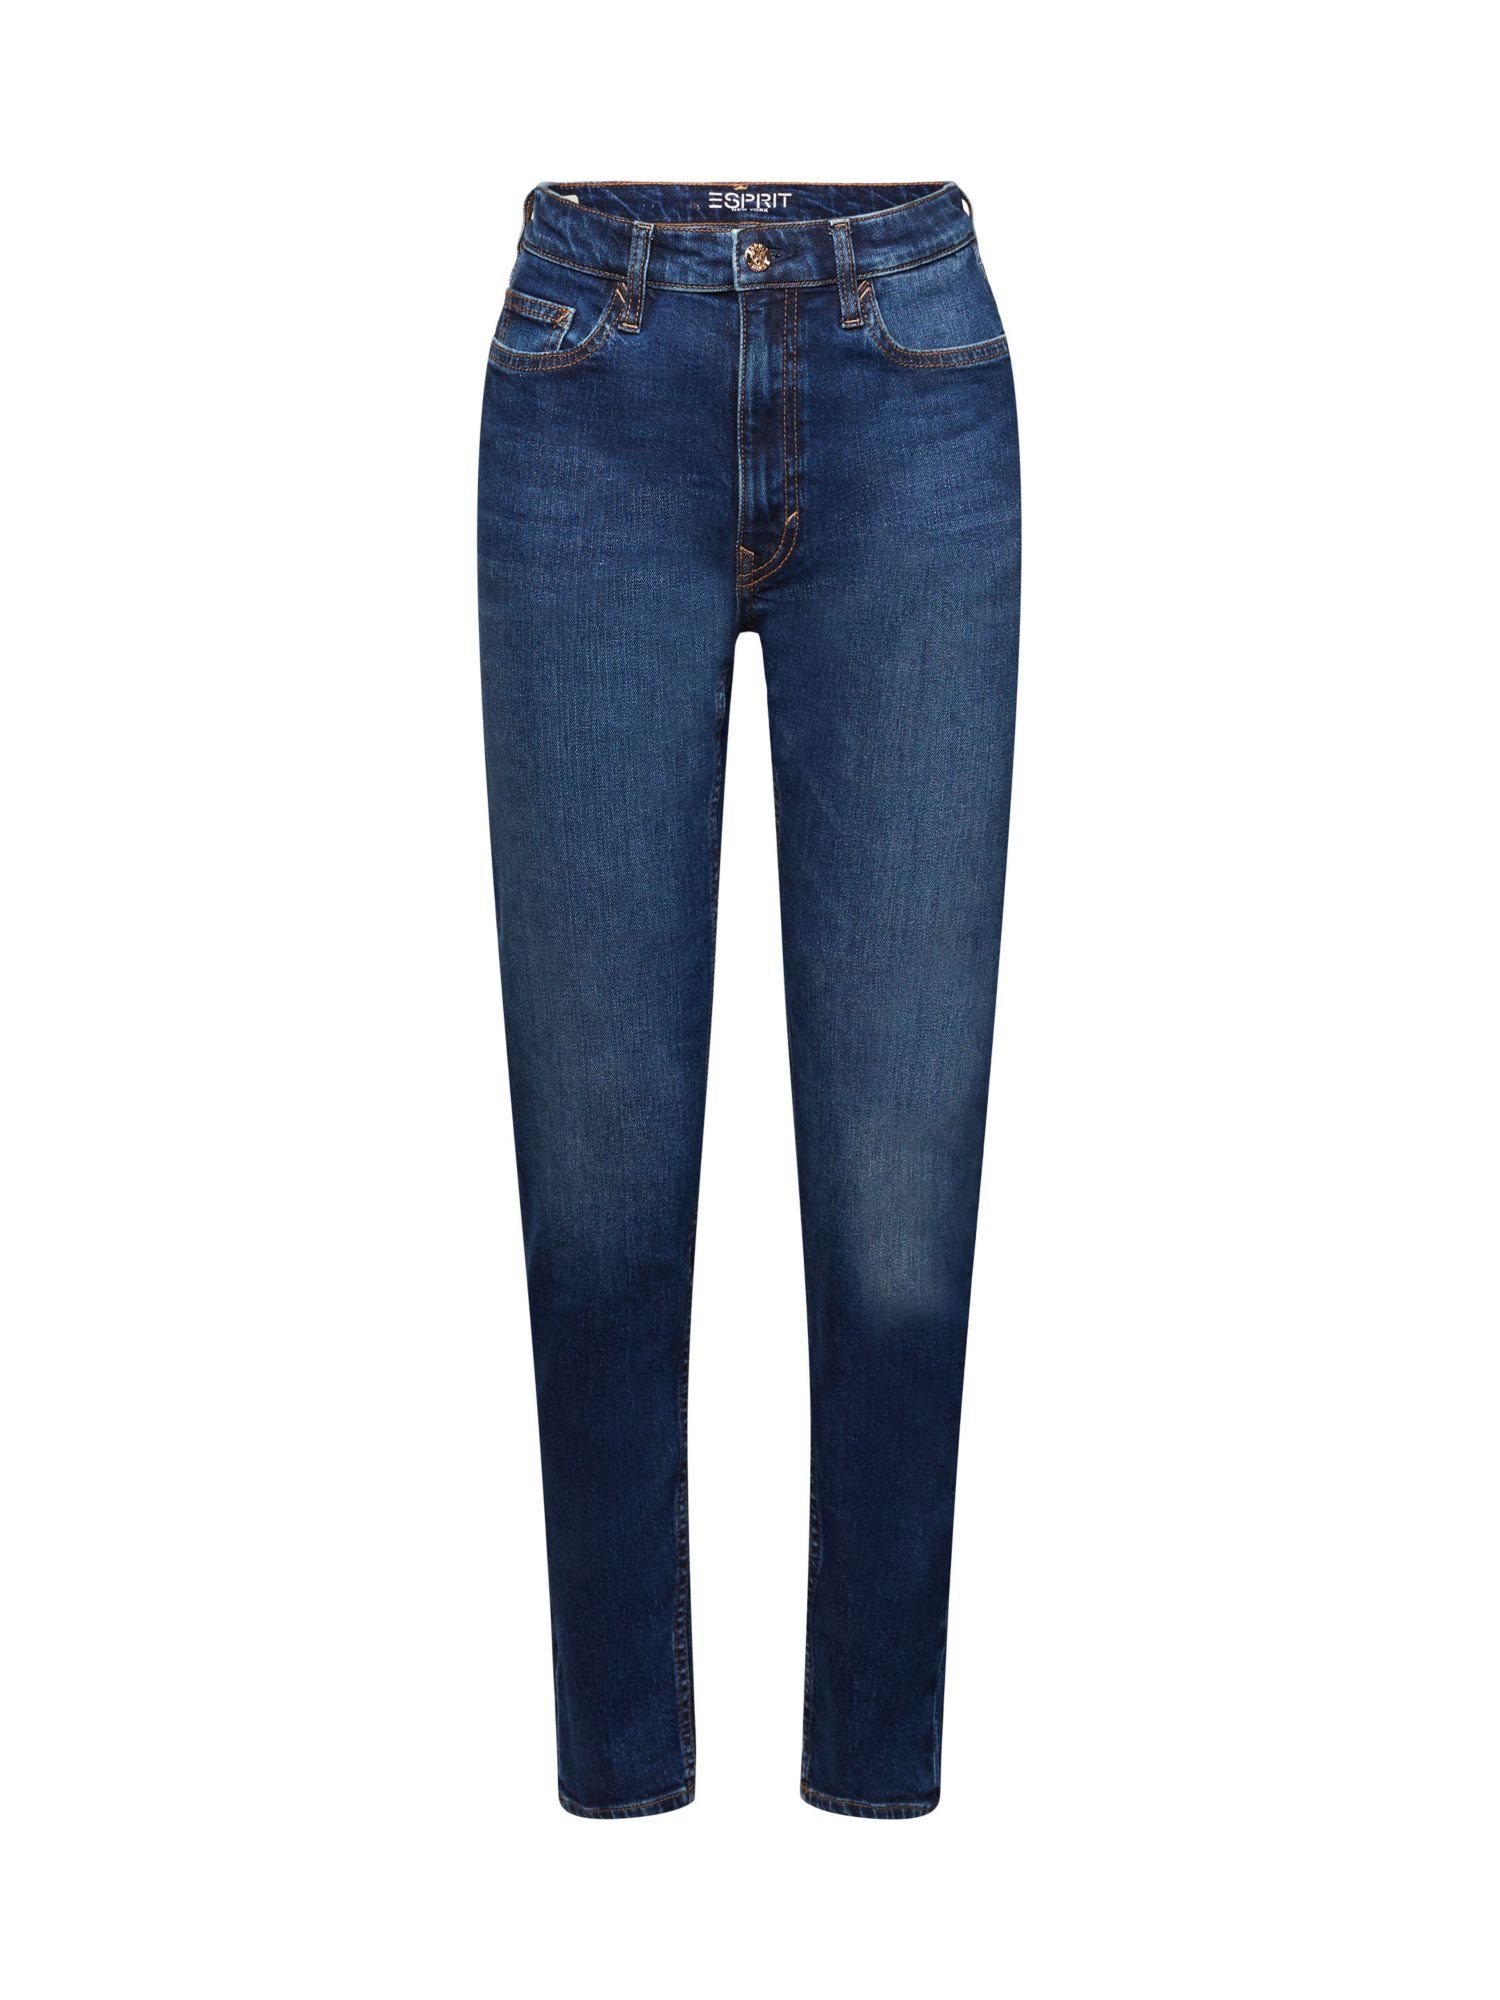 Esprit Bund Bequeme Retro-Classic-Jeans mit Jeans hohem